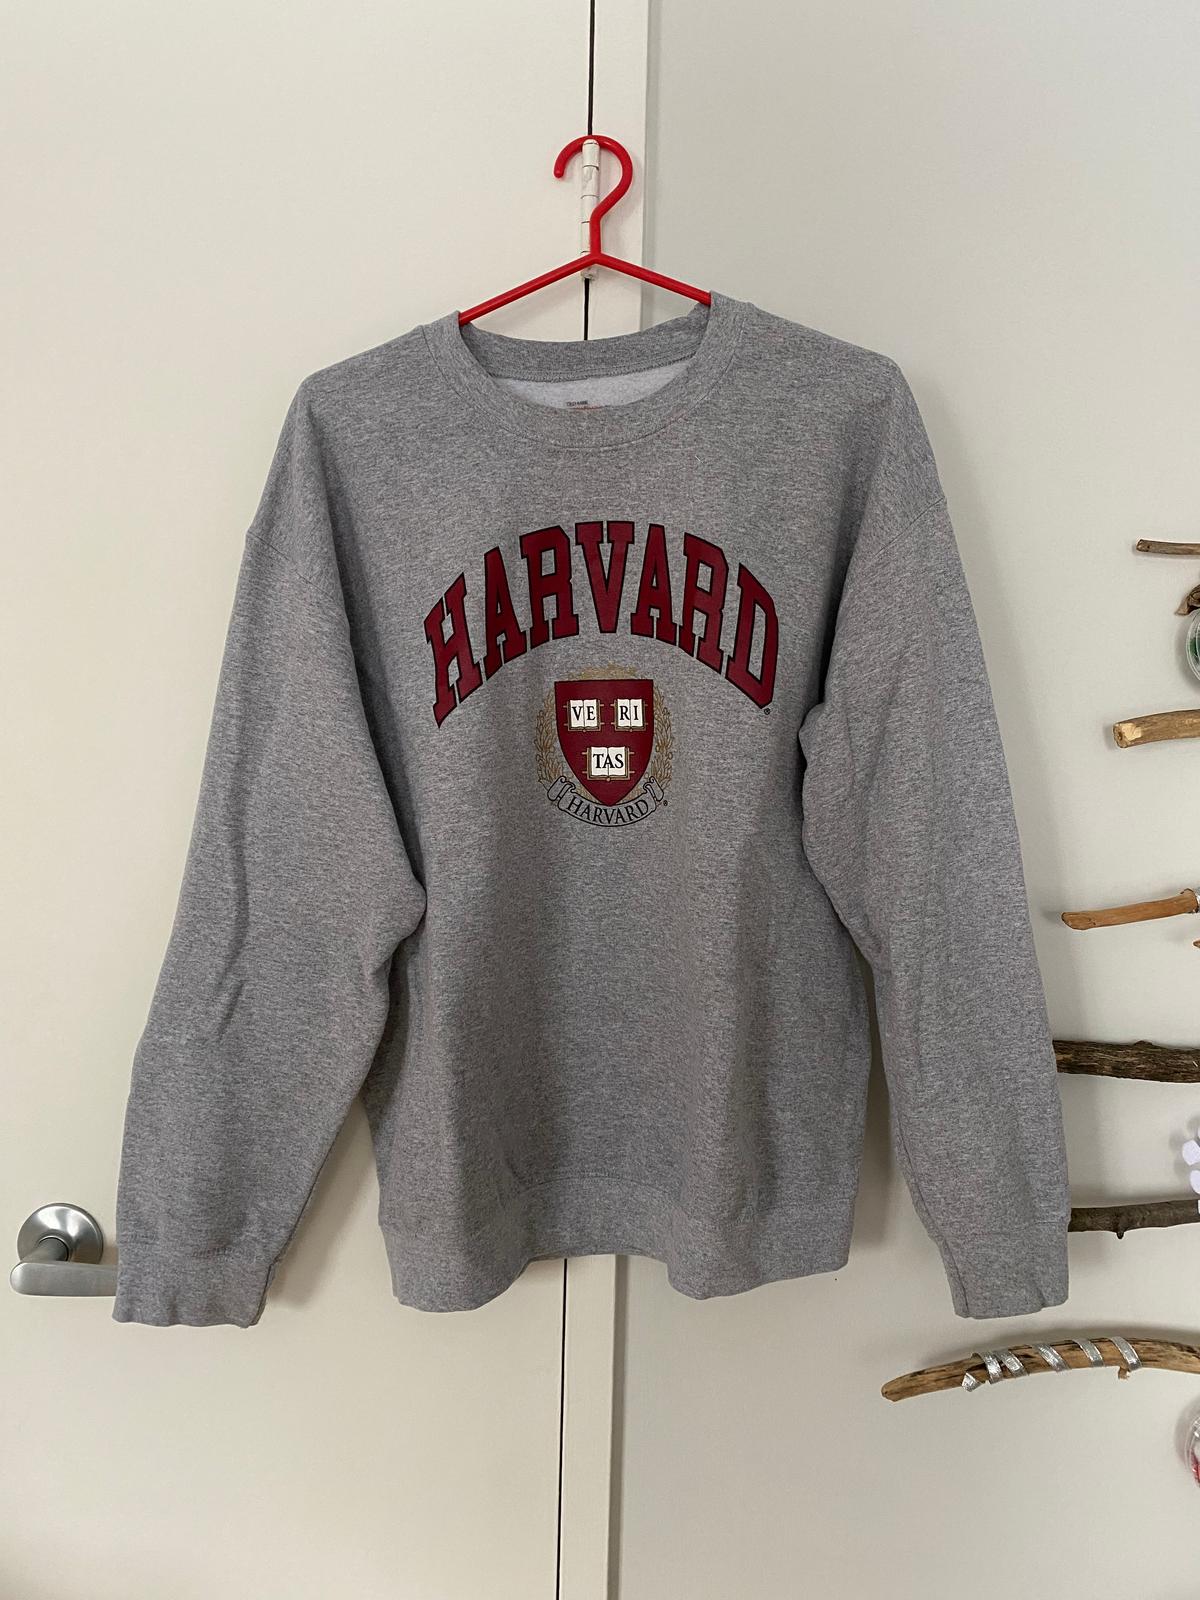 Photo of crewneck Harvard University